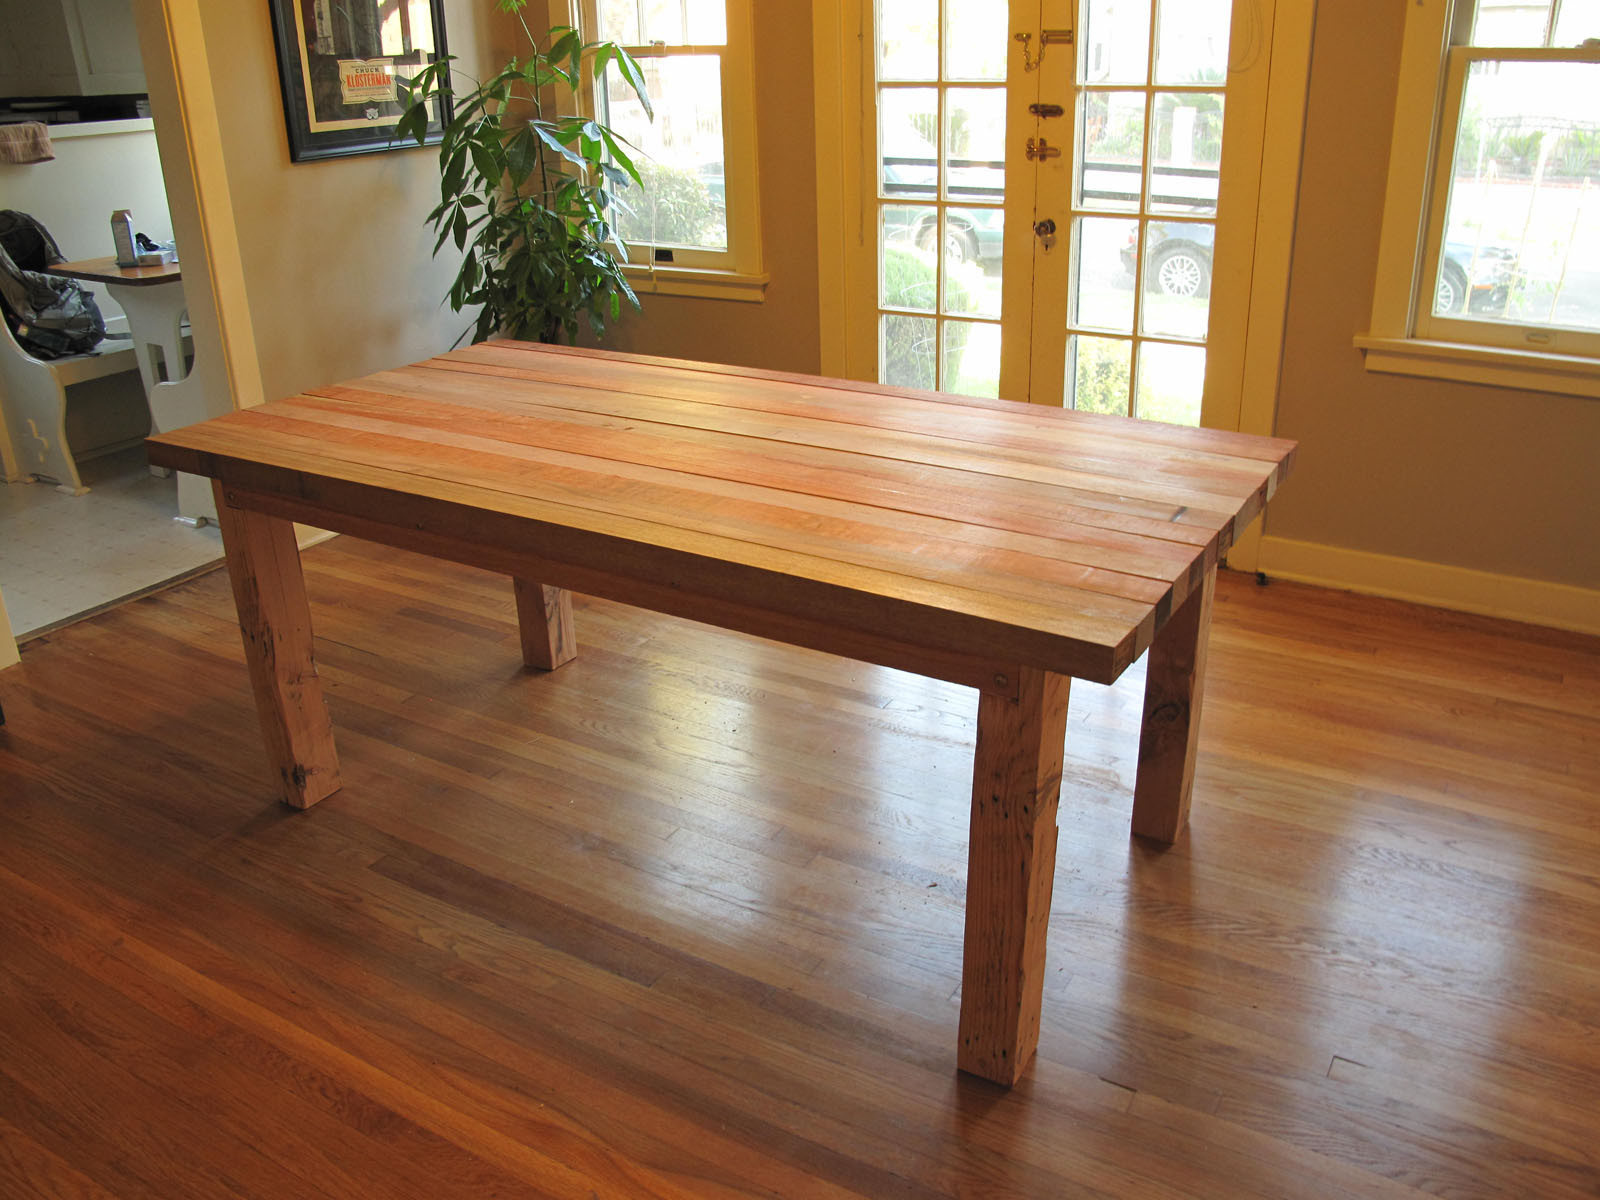 Reclaimed Wood Table DIY
 DIY Reclaimed Wood Dining Table